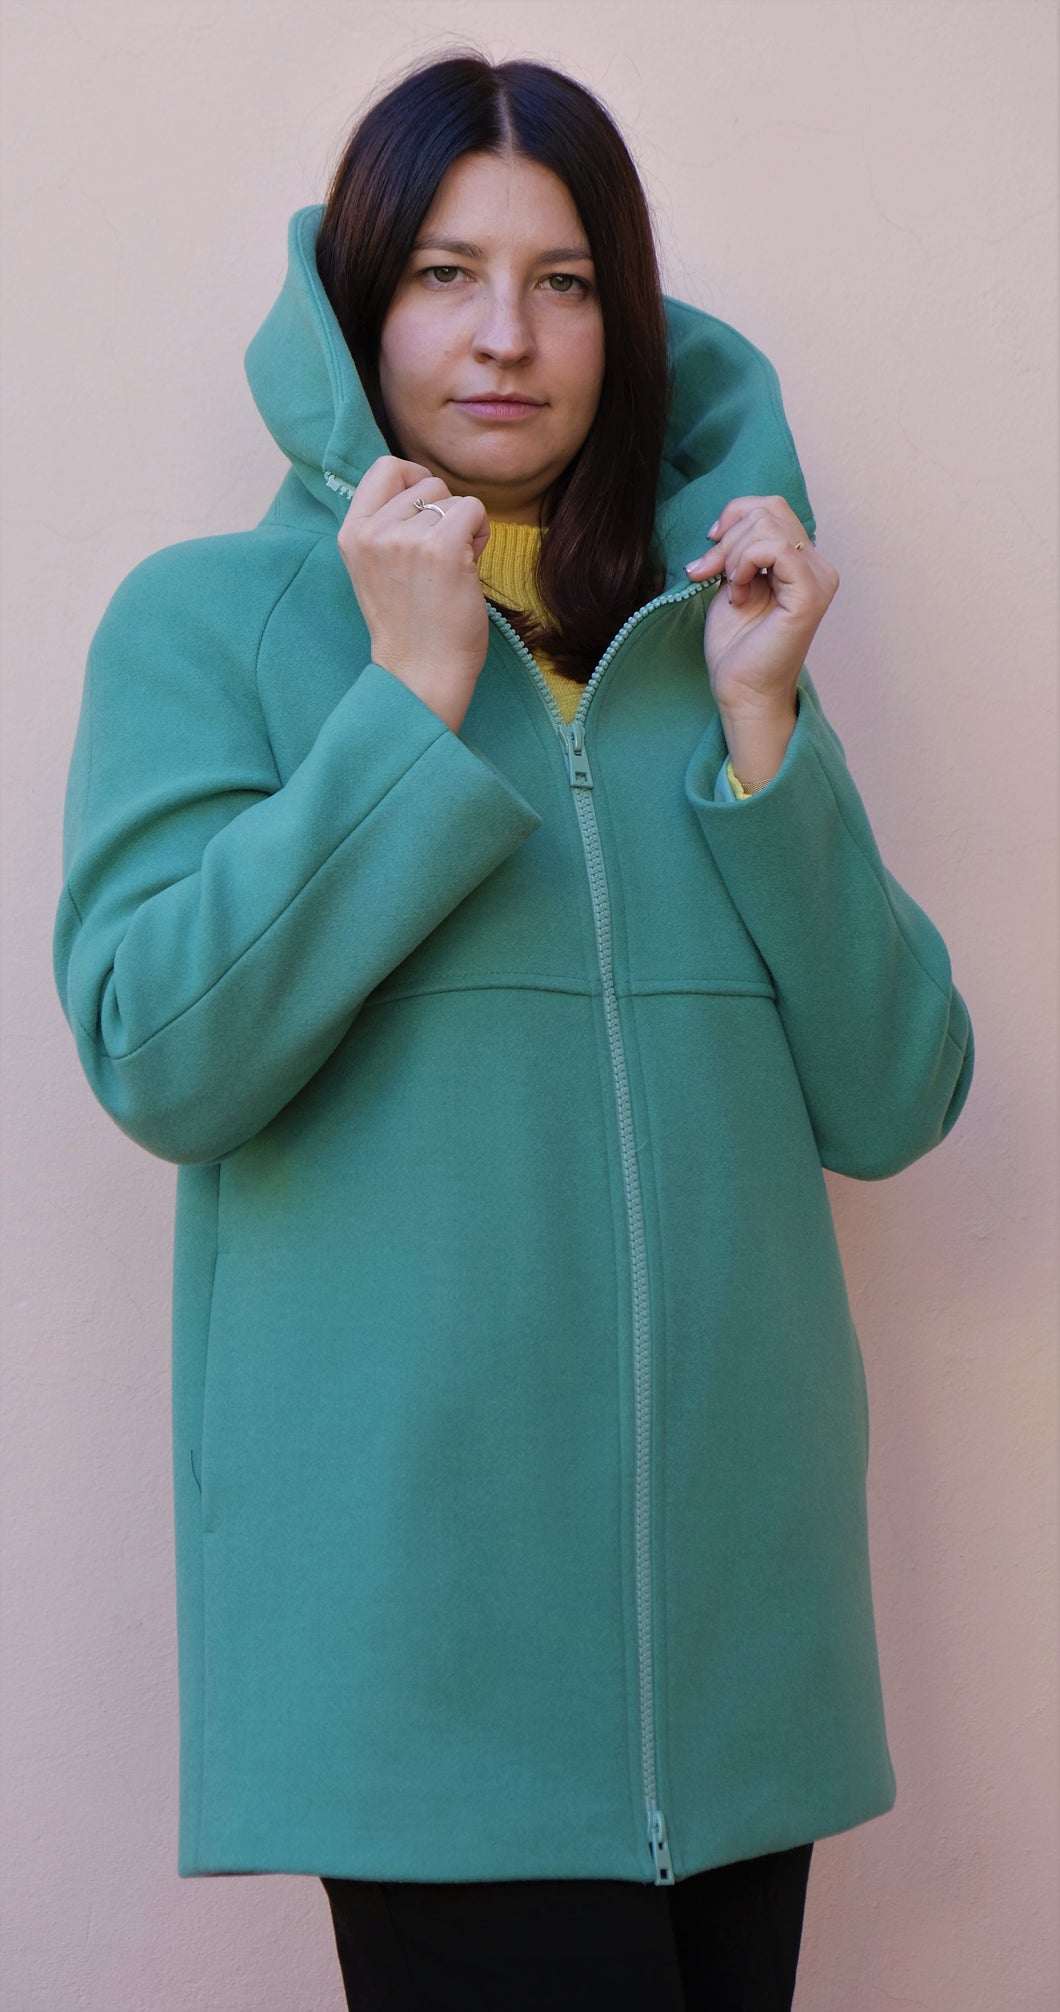 Diana Gallesi - Giaccone di lana, color verde menta, zippato, fodertato